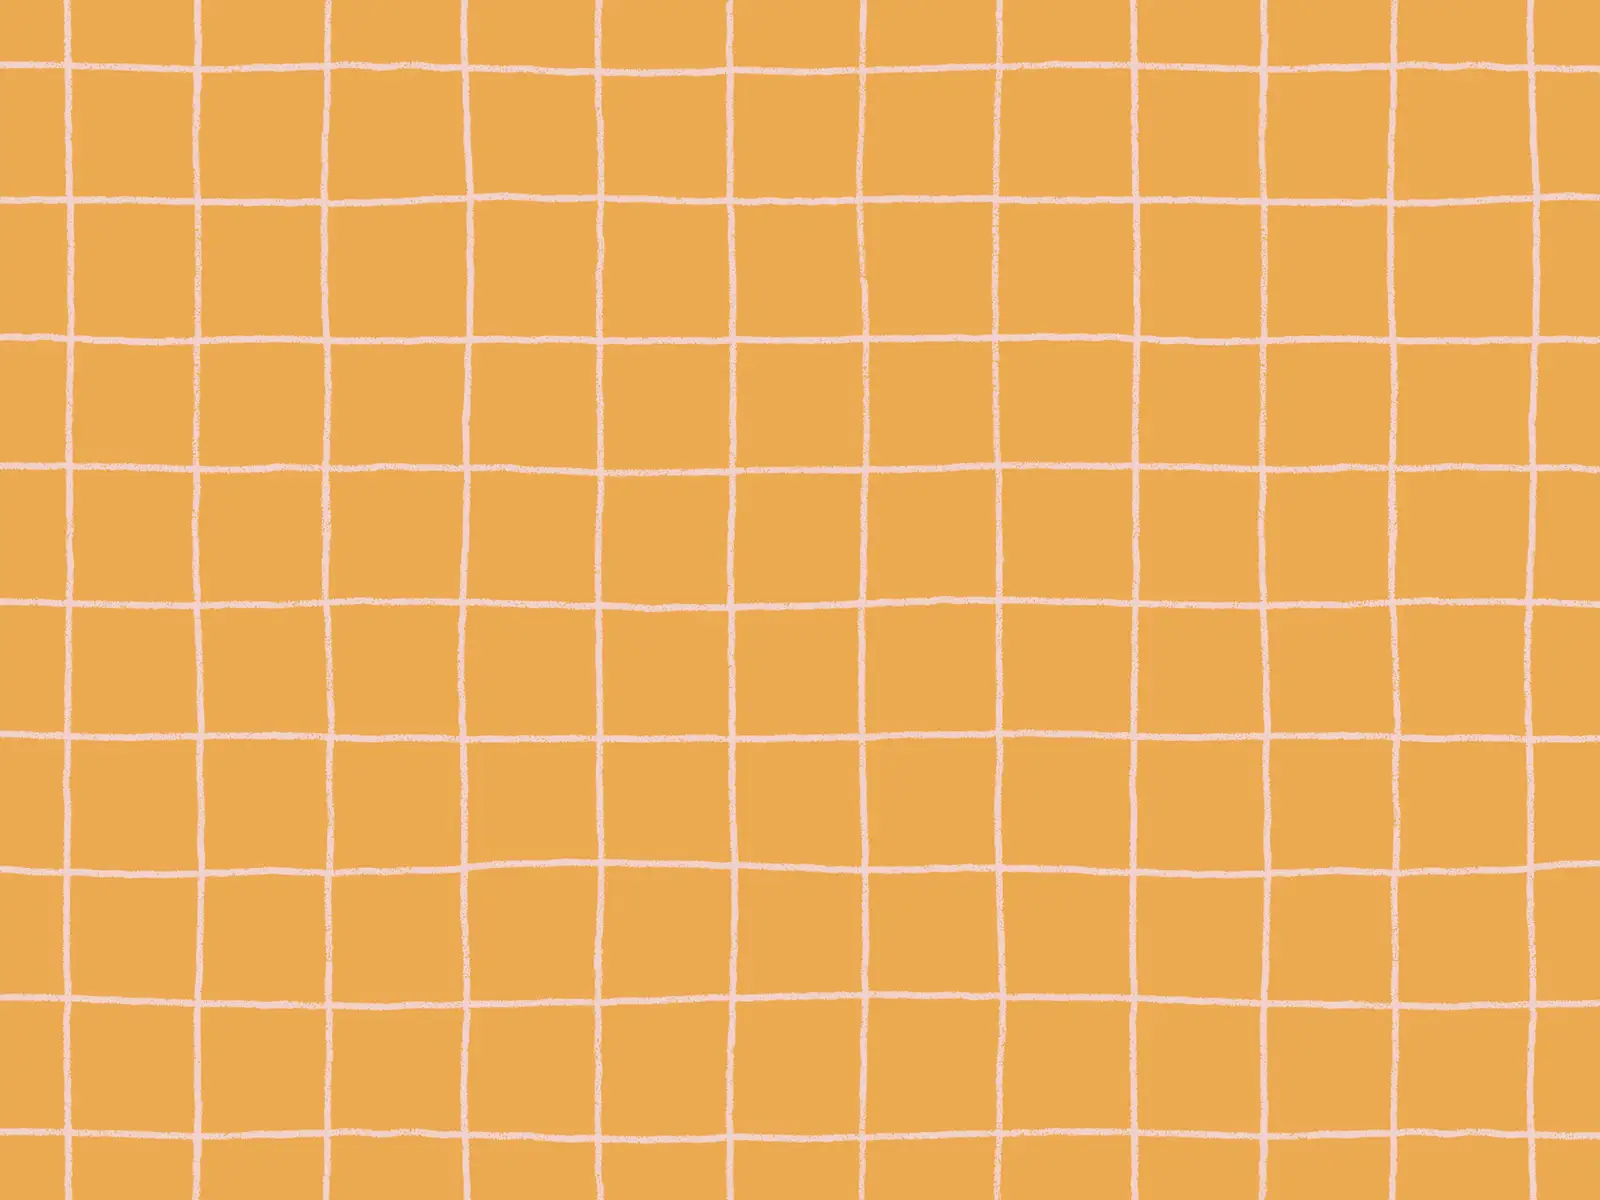 Orange grid pattern